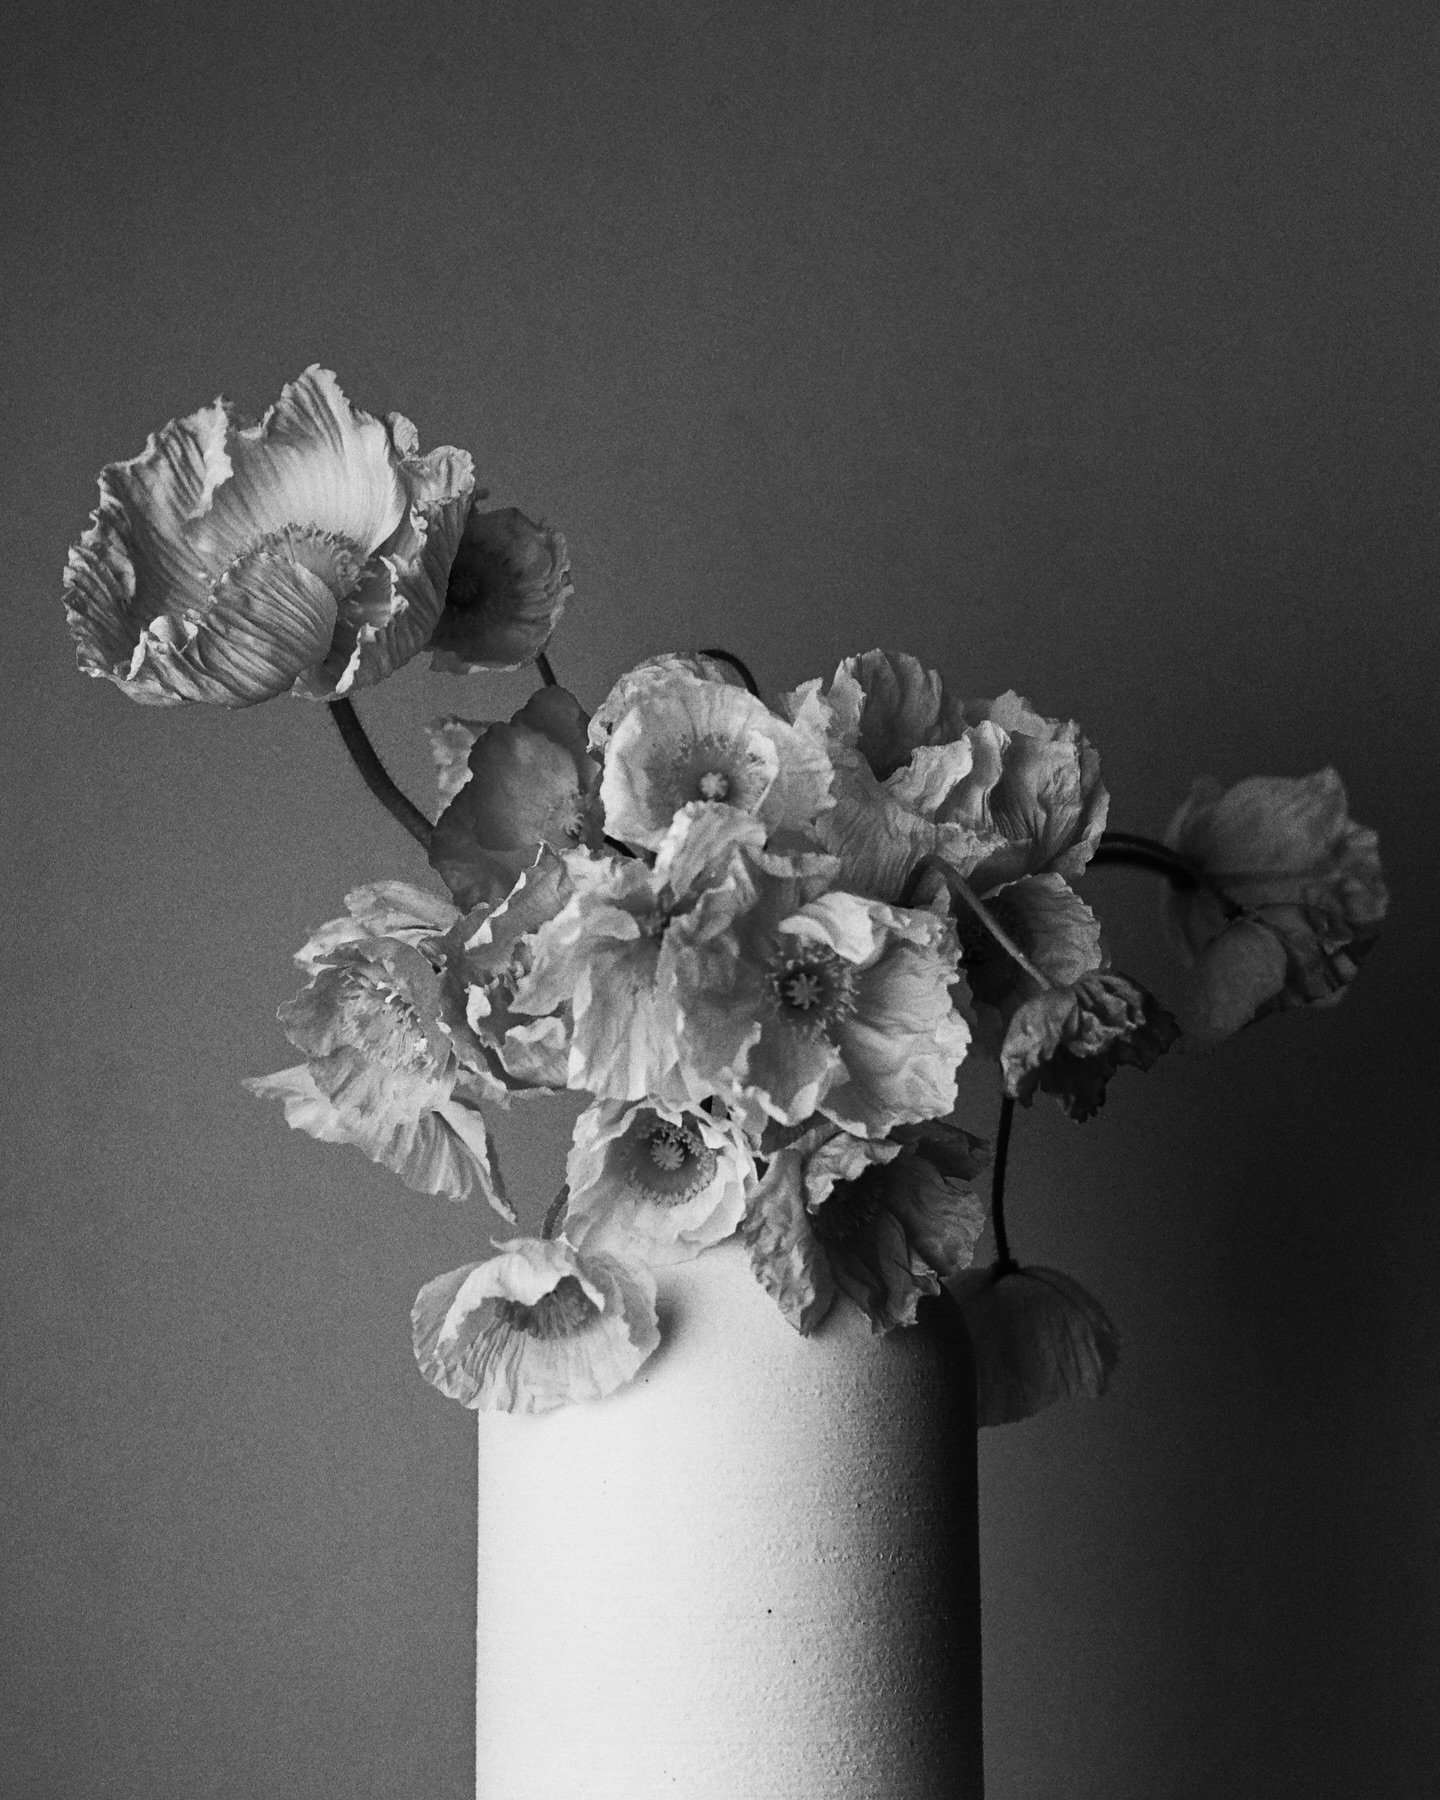 Poppy appreciation 🖤

Artful single ingredient floral arrangements are always my favorite. 

#artfulflorals #flowerarrangement #sustainablefloristry #denverflorist #coloradoflowers